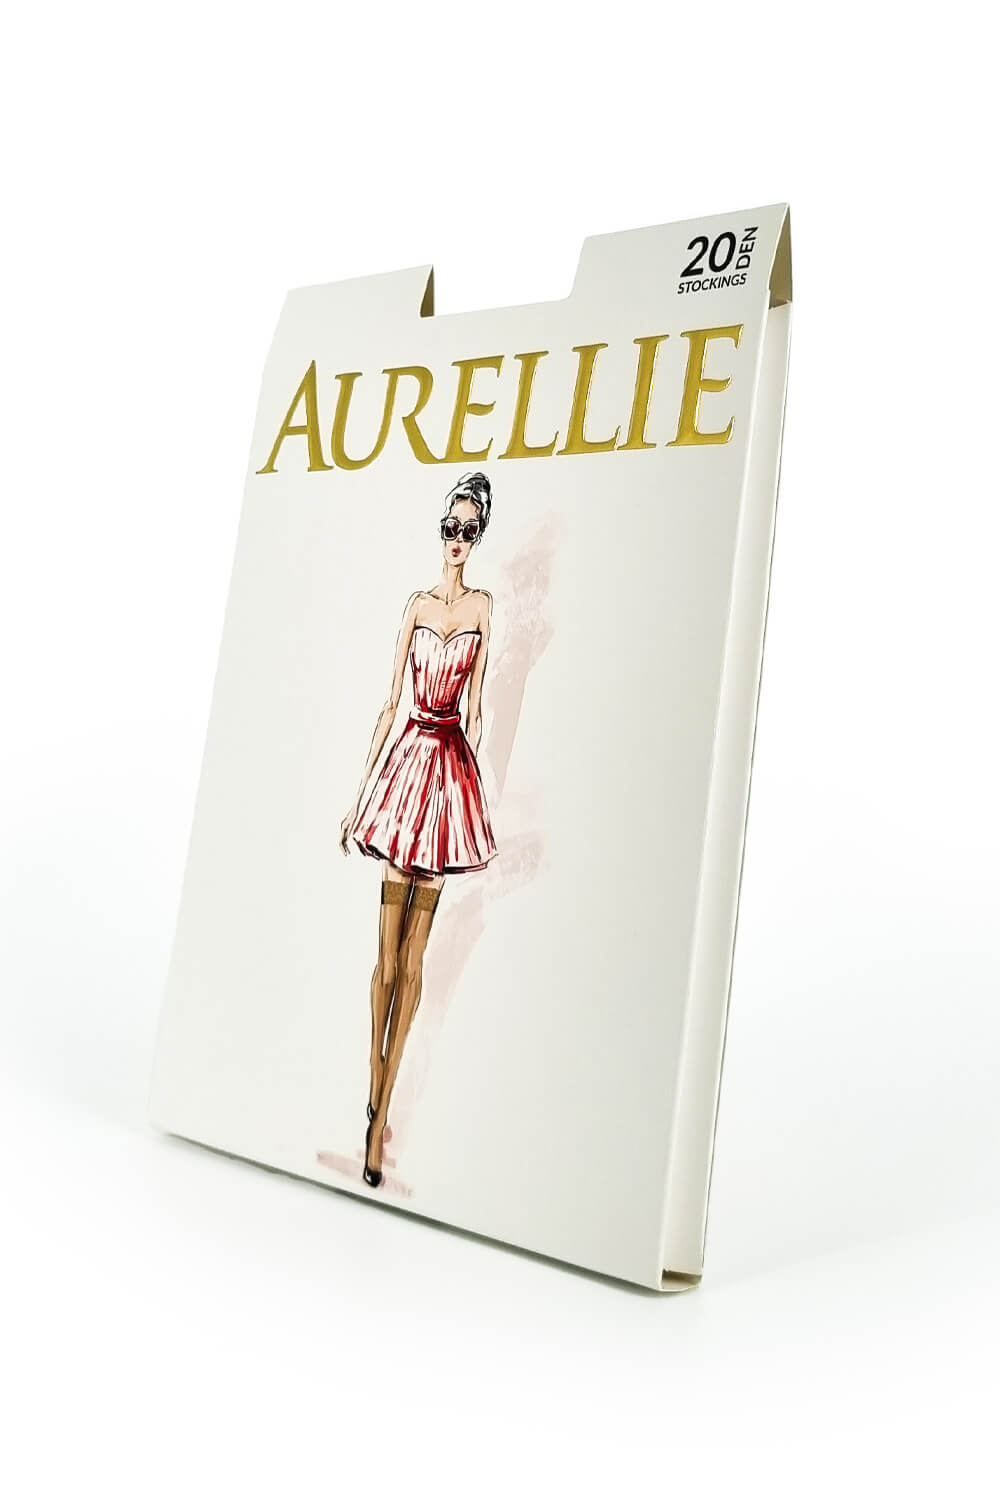 Aurellie Plus Size Sheer Hold-Up Stockings 20 DEN Black